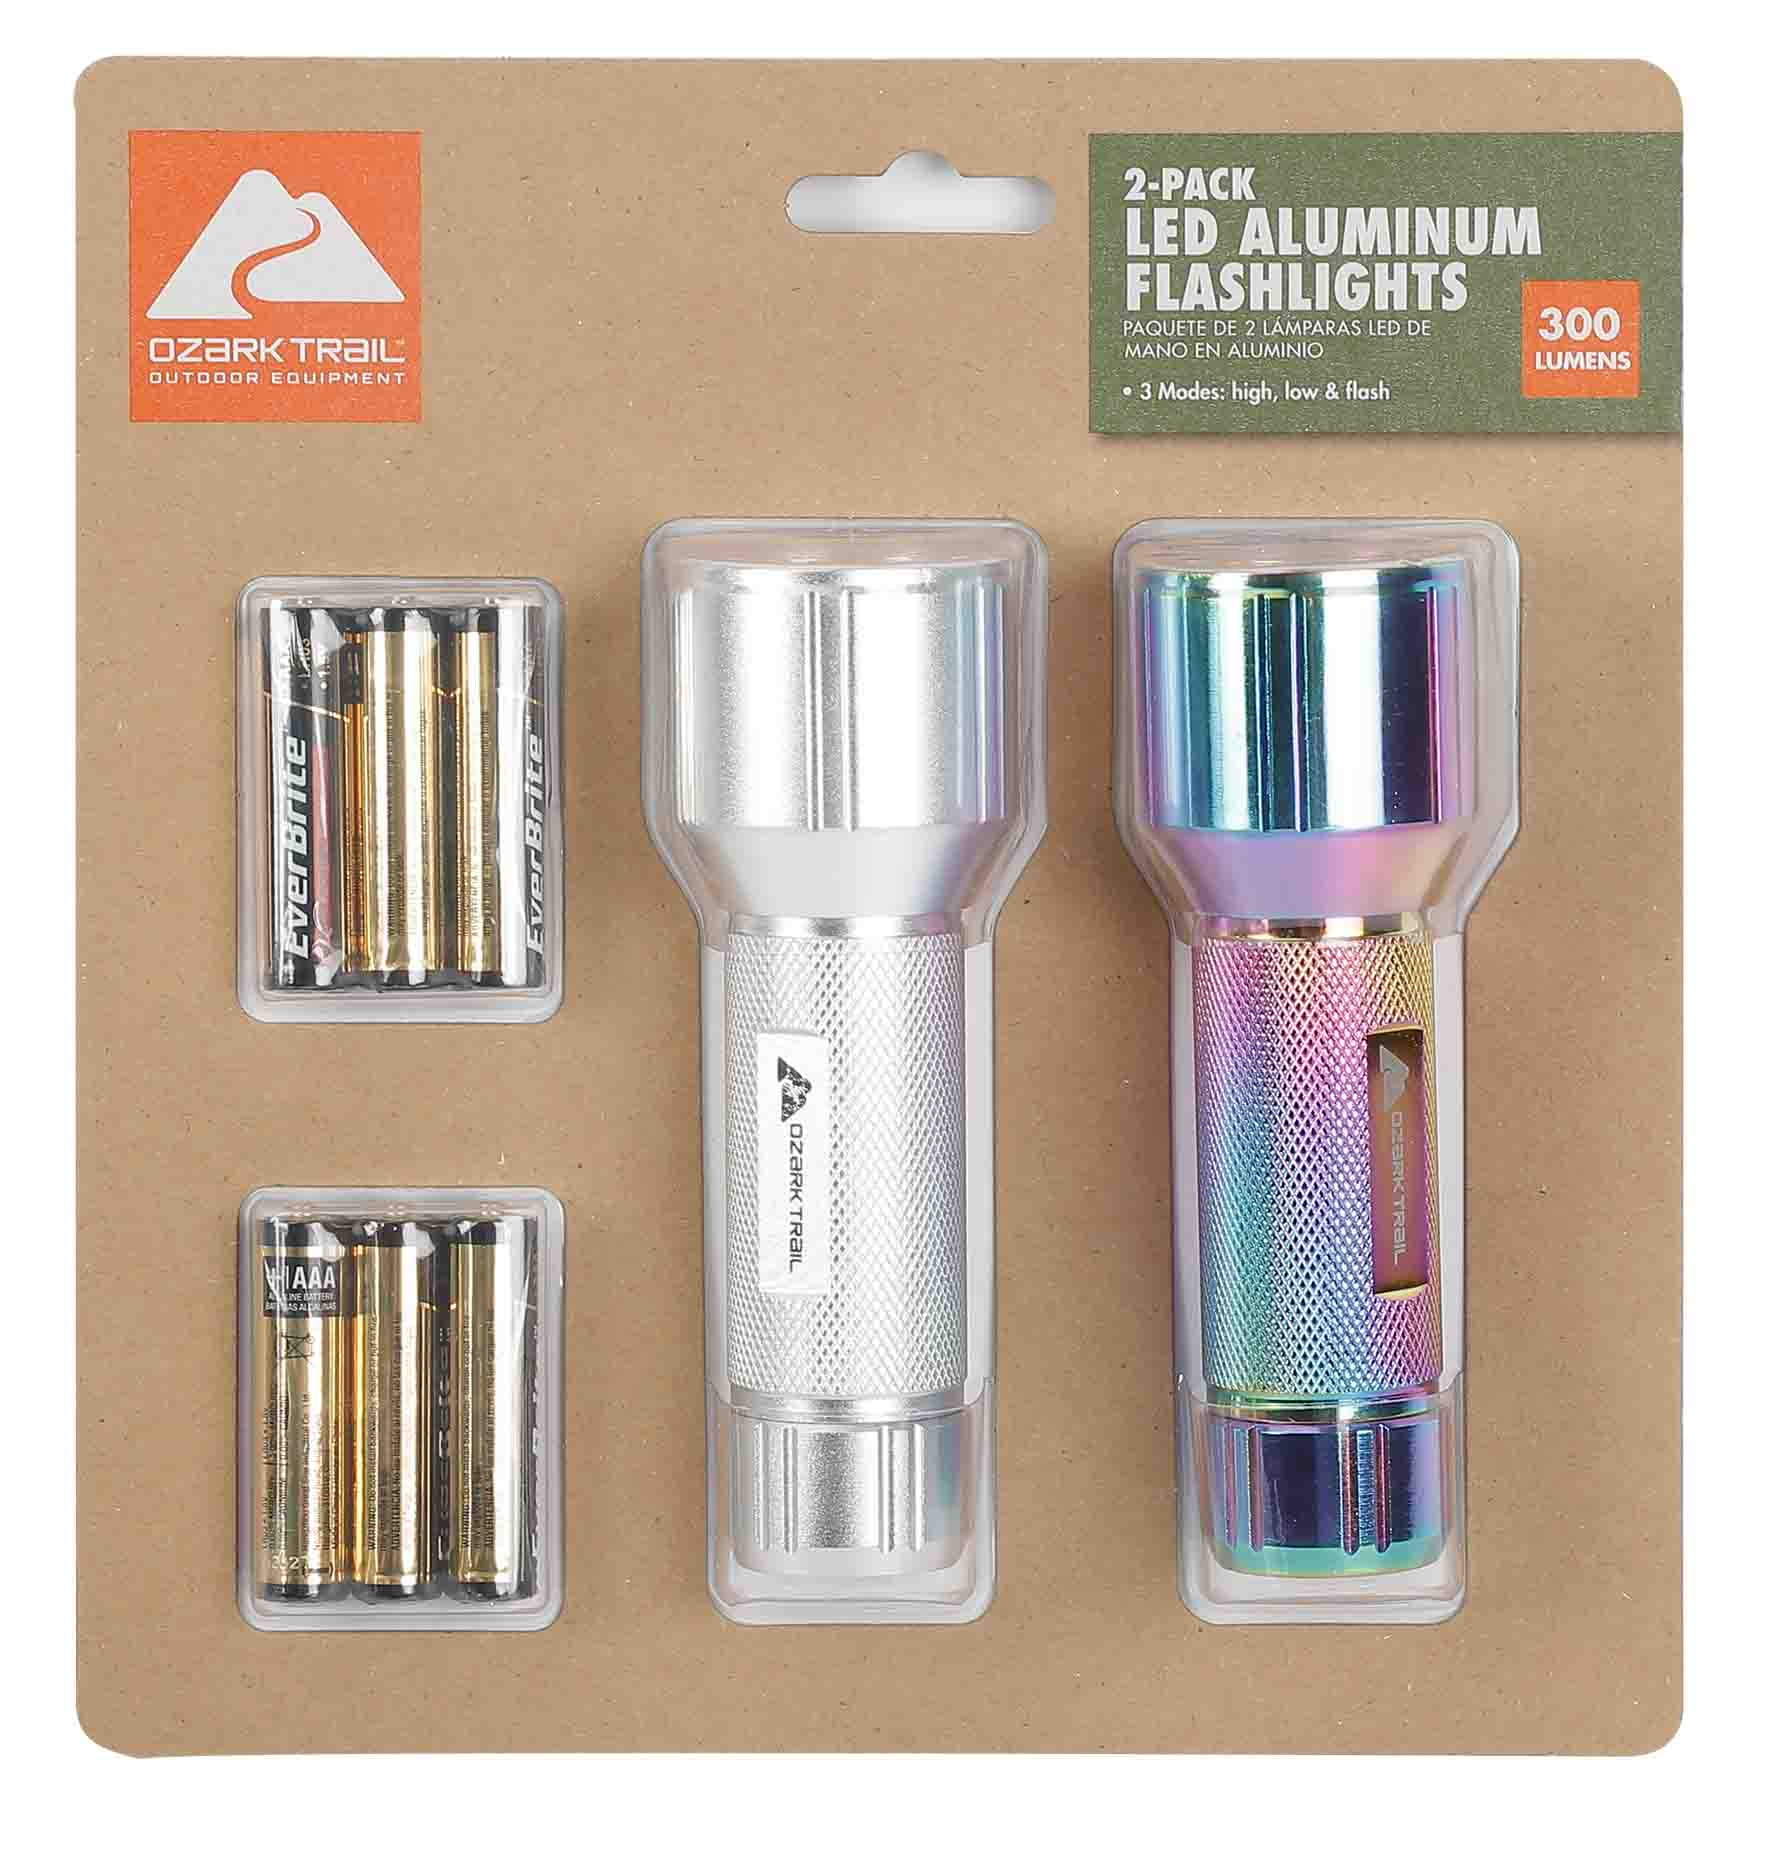 2-Pack Ozark Trail LED 300 Lumens Handheld Aluminum Flashlights w/ 6 AAA Batteries (Silver & Iridescent) $6.05 & More + Free S&H w/ Walmart+ or $35+